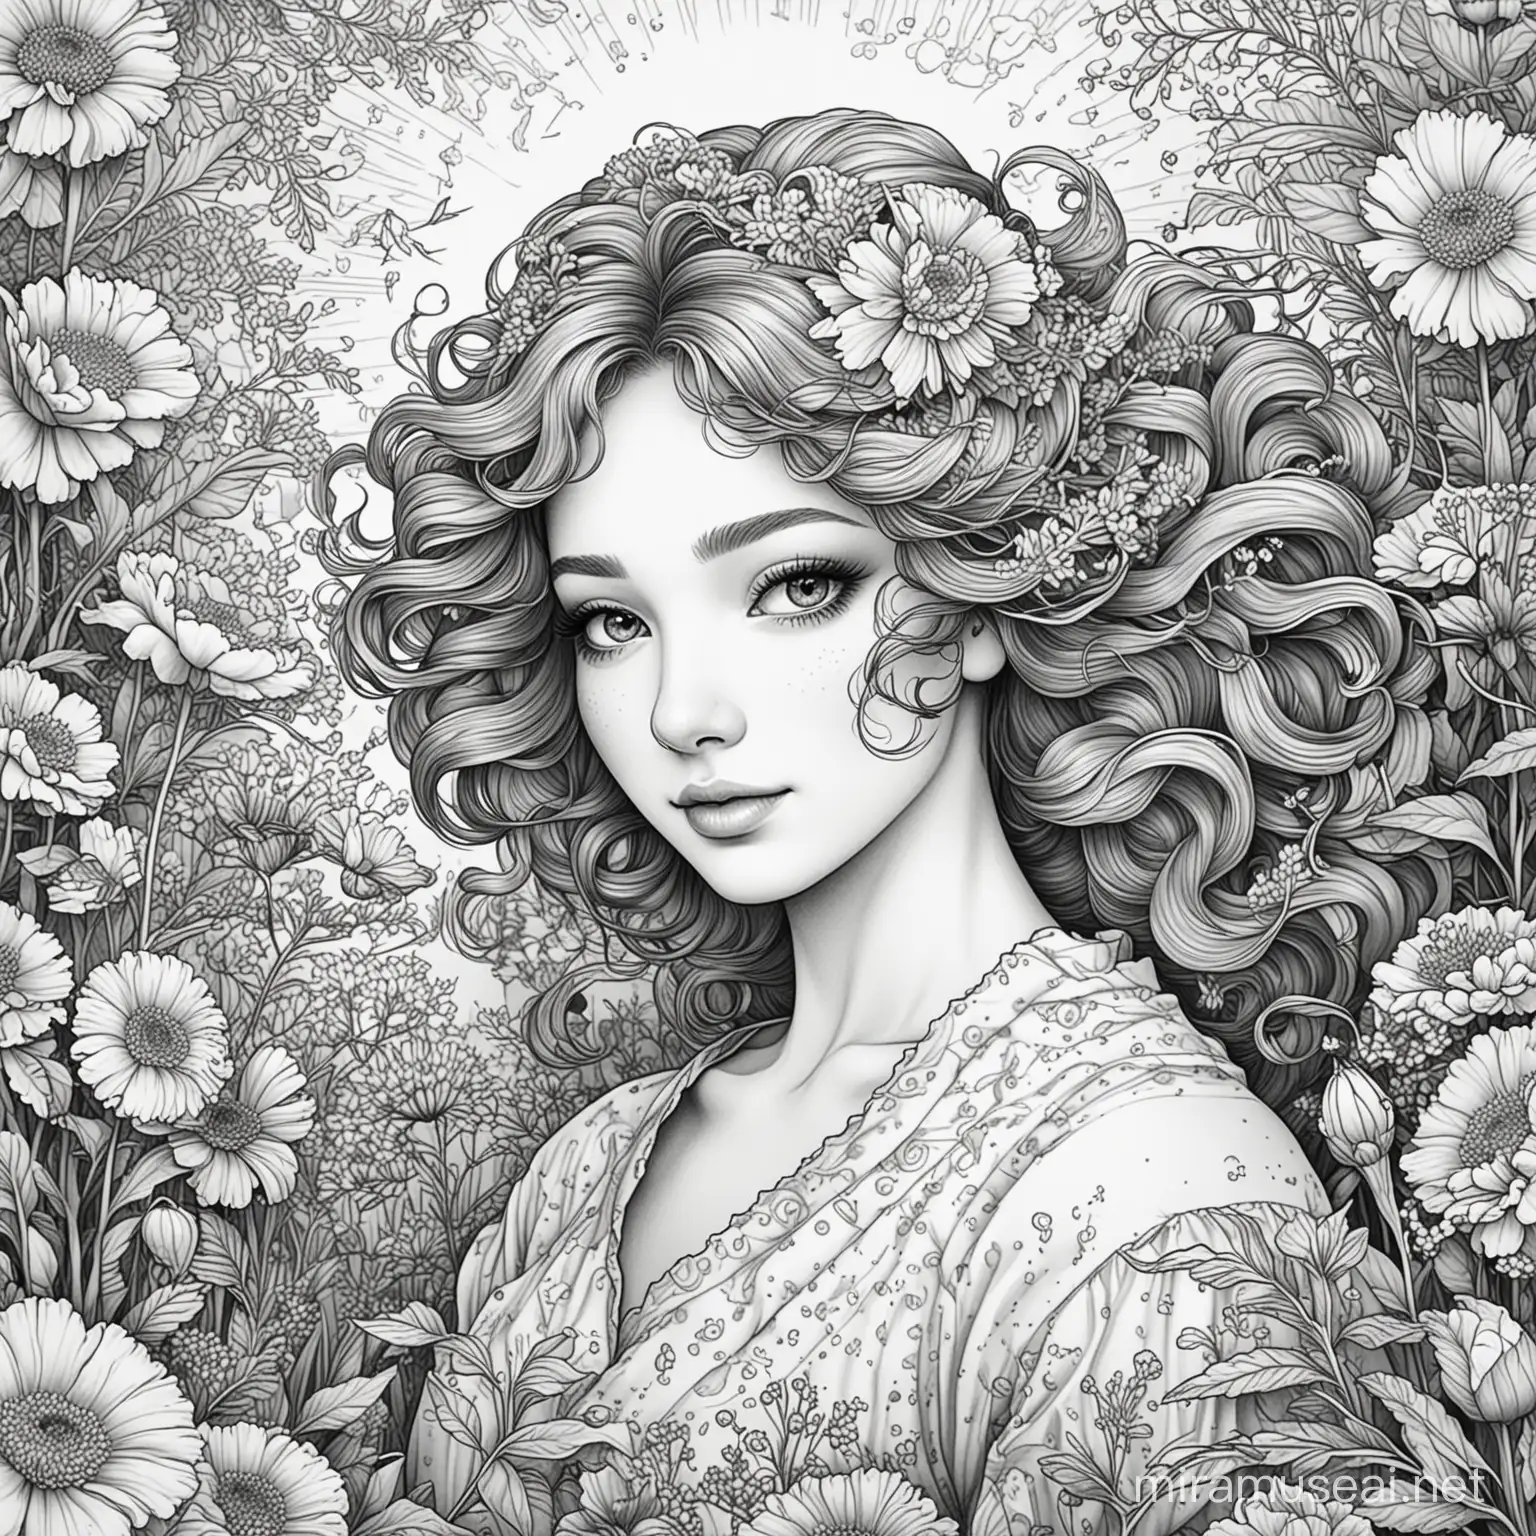 Marigold Melody Spring Lady Vibrant BlackandWhite Coloring Book Illustration